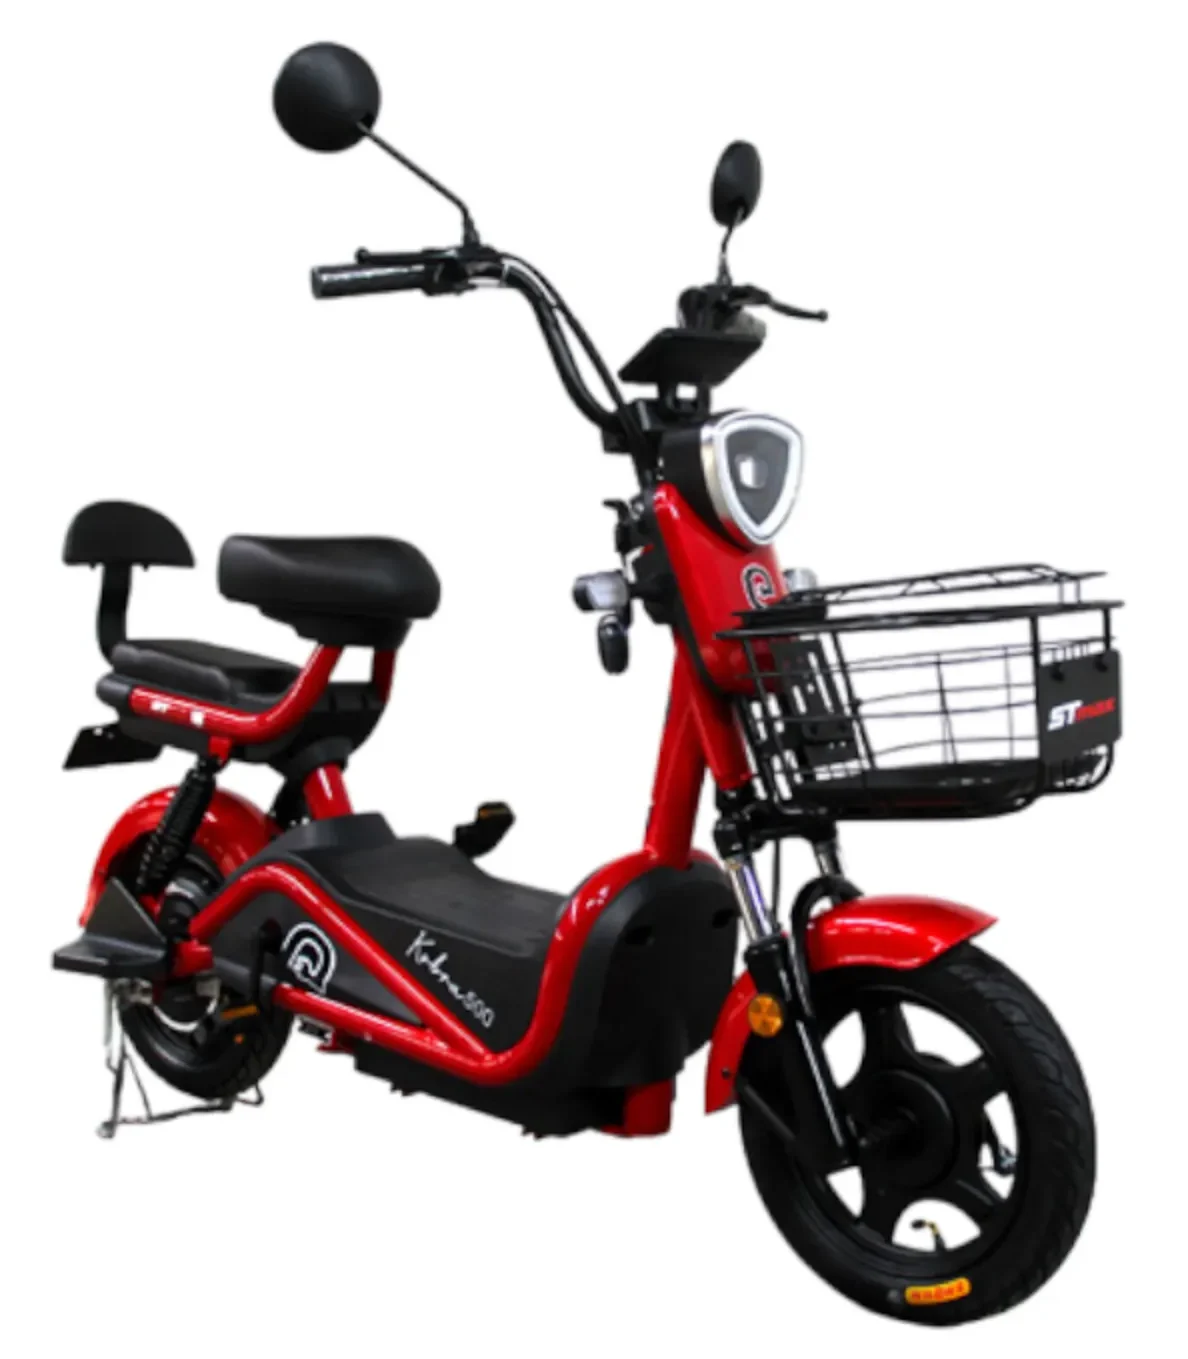 Stmax Kobra 500 Elektrikli Moped e1695576779677